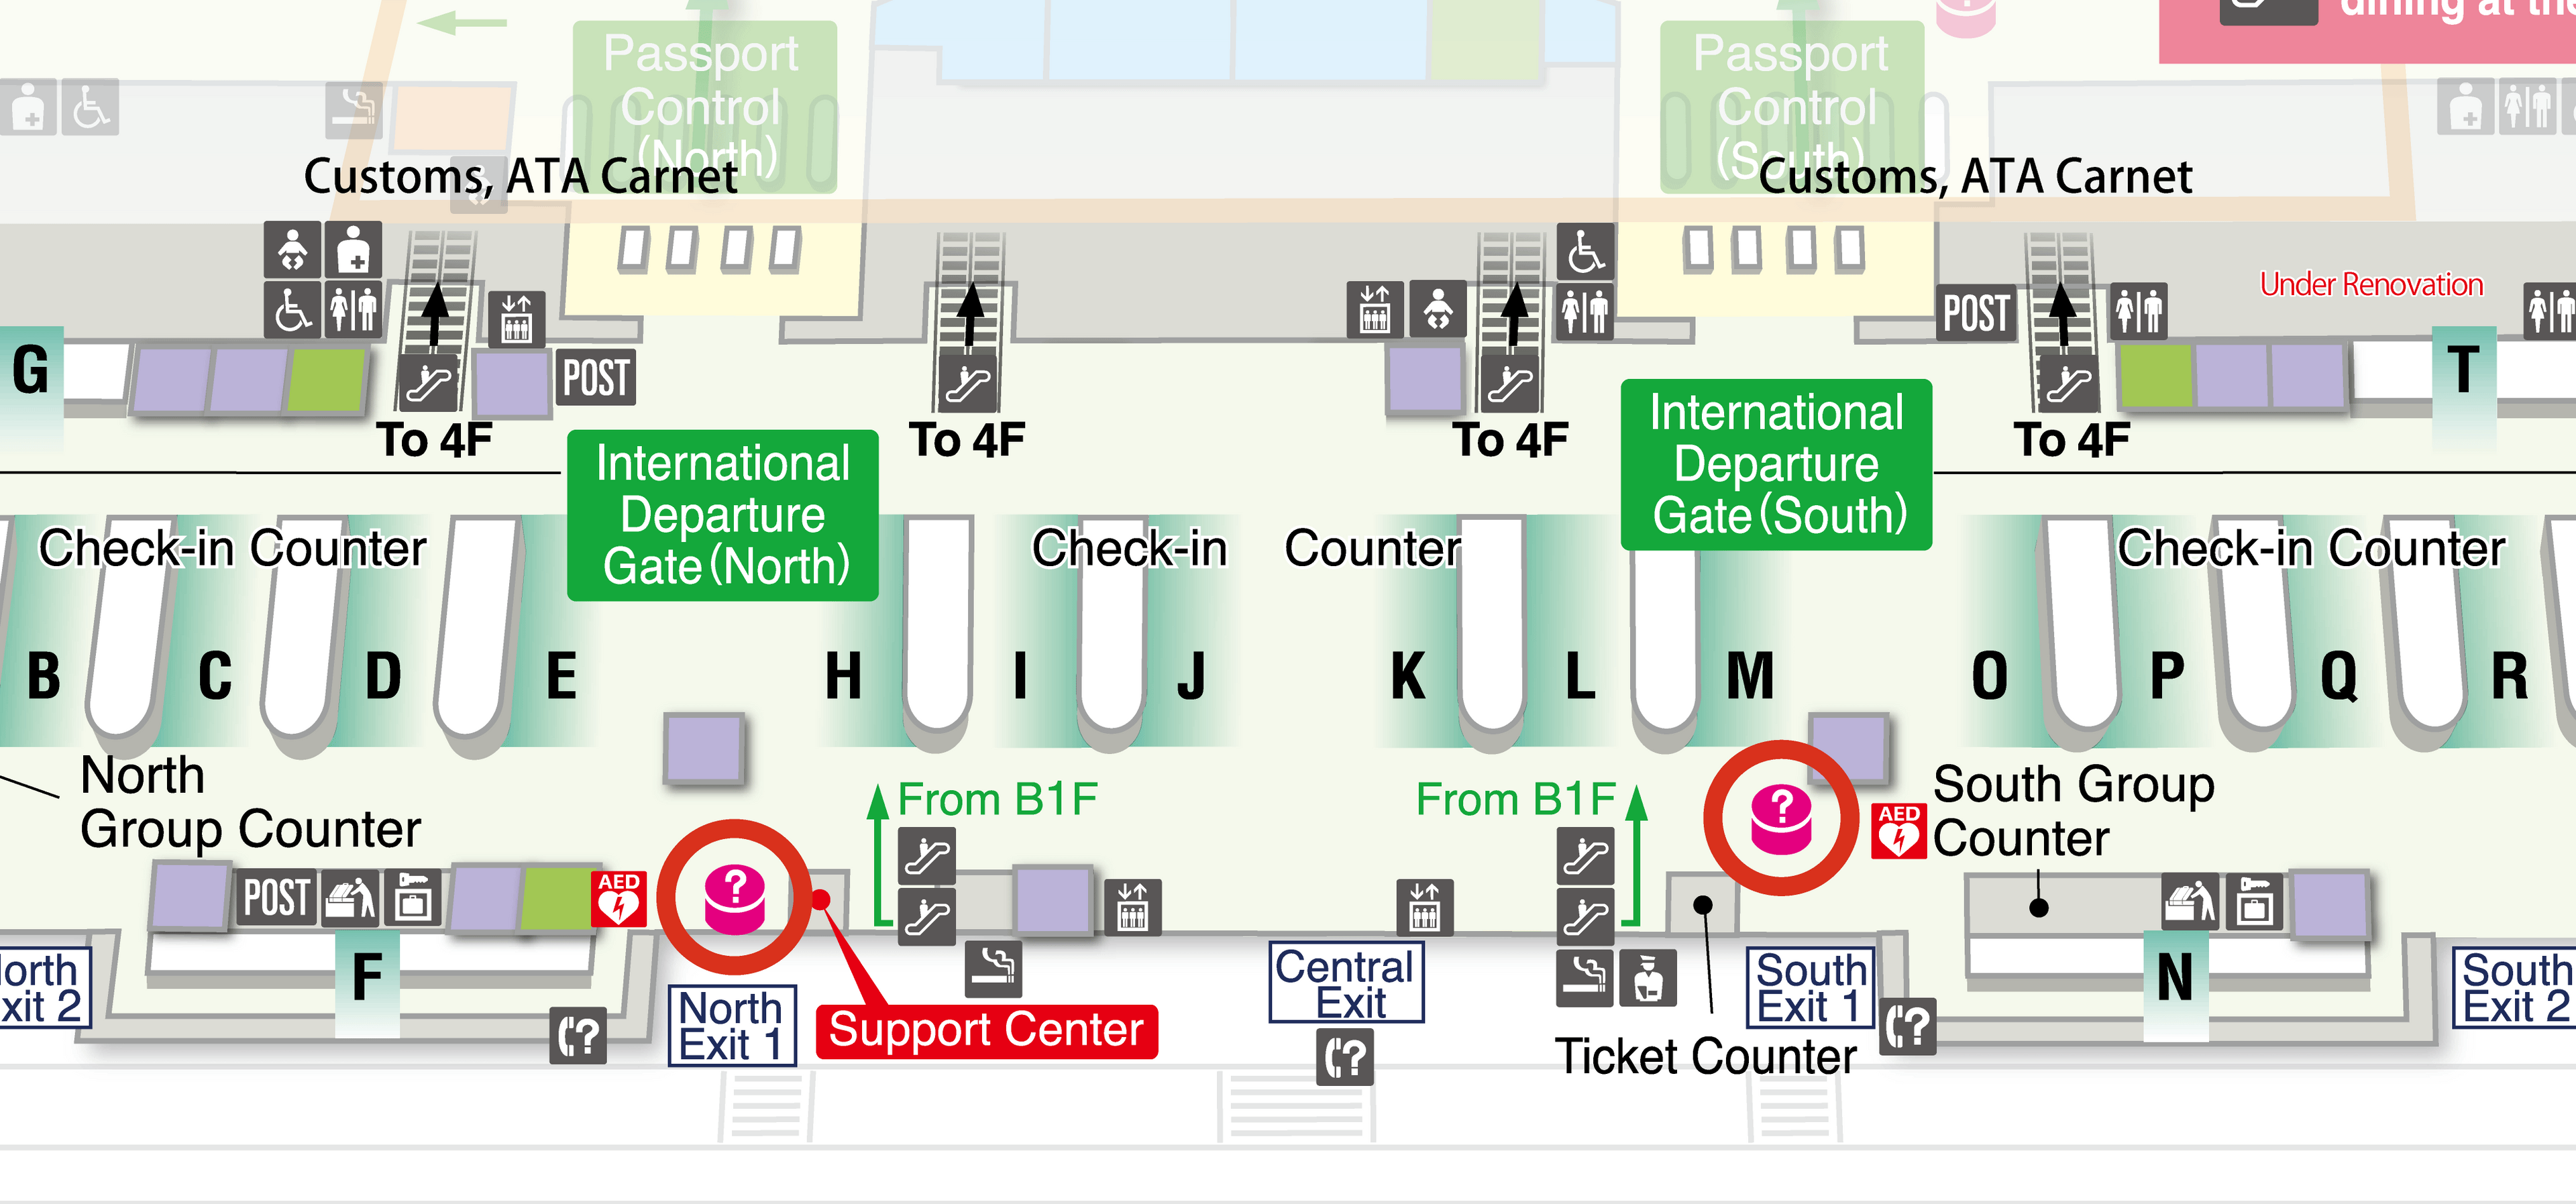 Terminal 2 3F International Departure Lobby Floor Map diagram